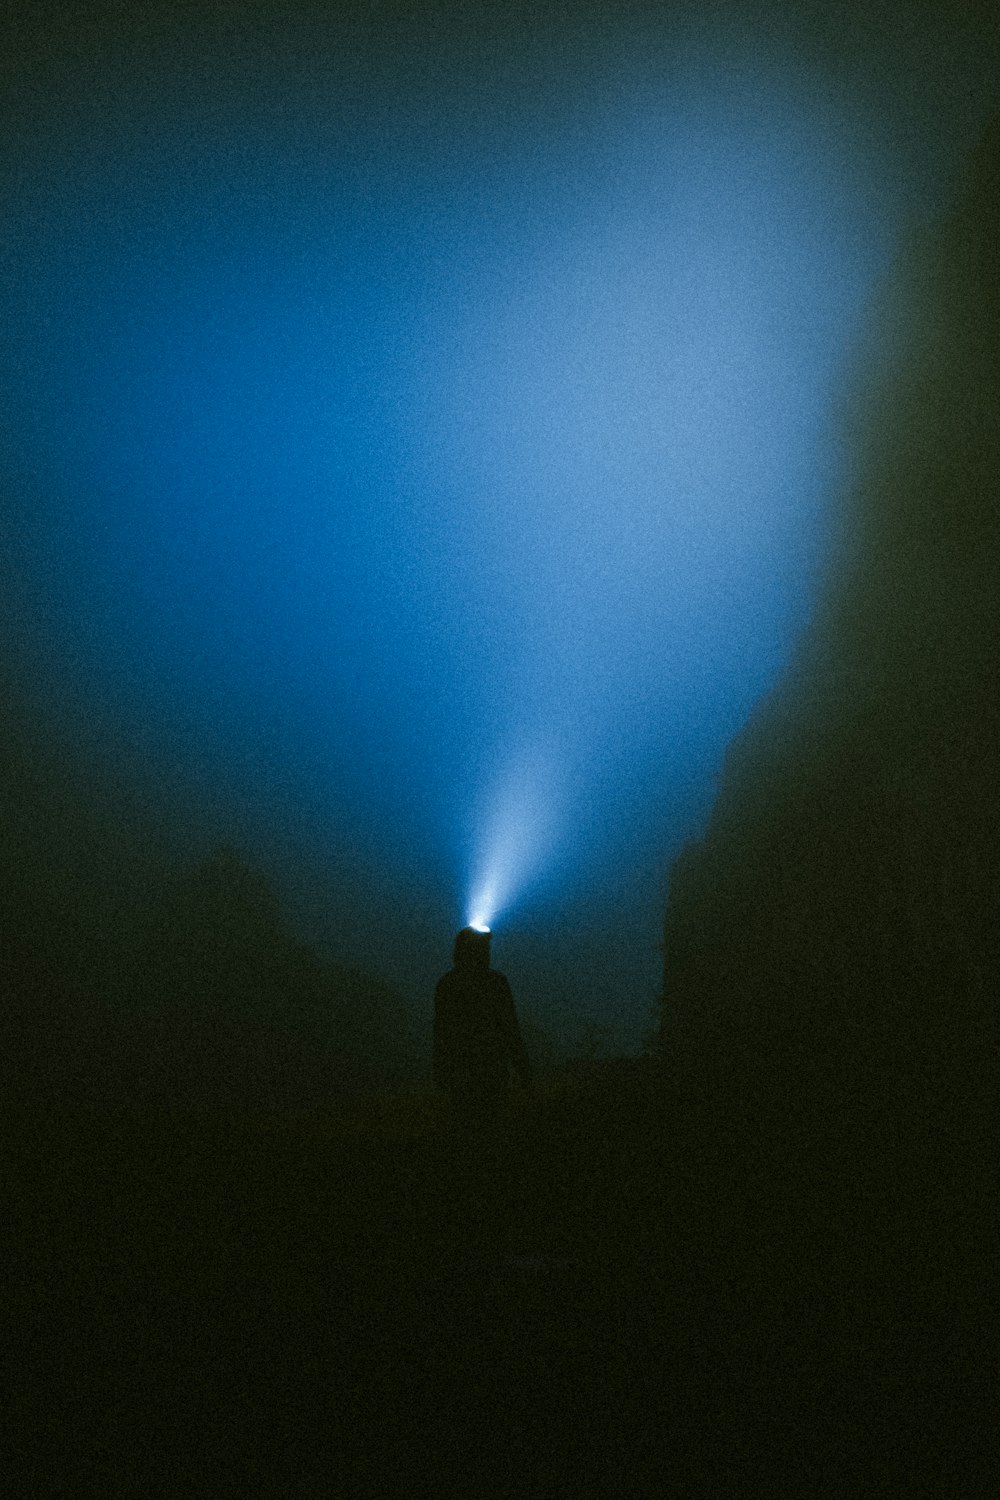 a person standing in a dark area